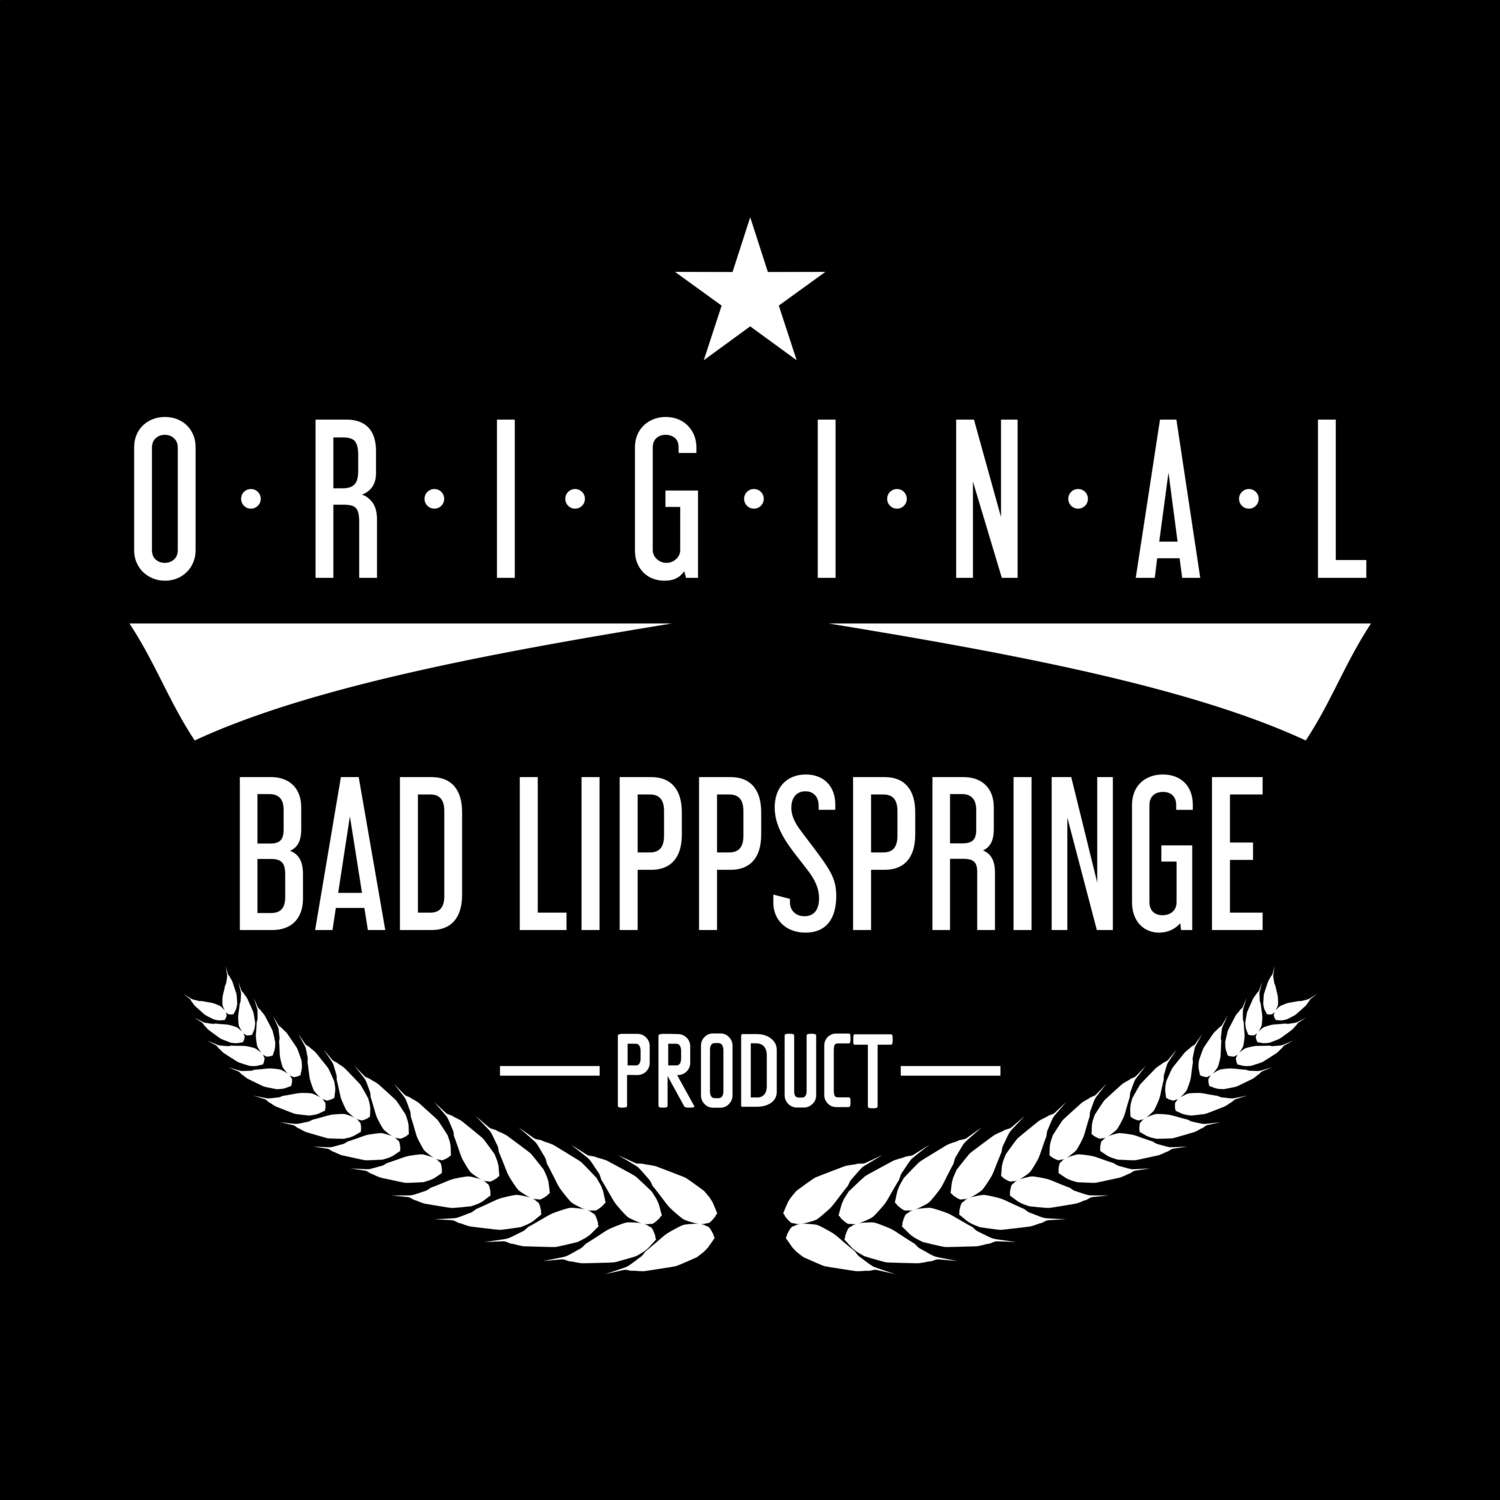 Bad Lippspringe T-Shirt »Original Product«